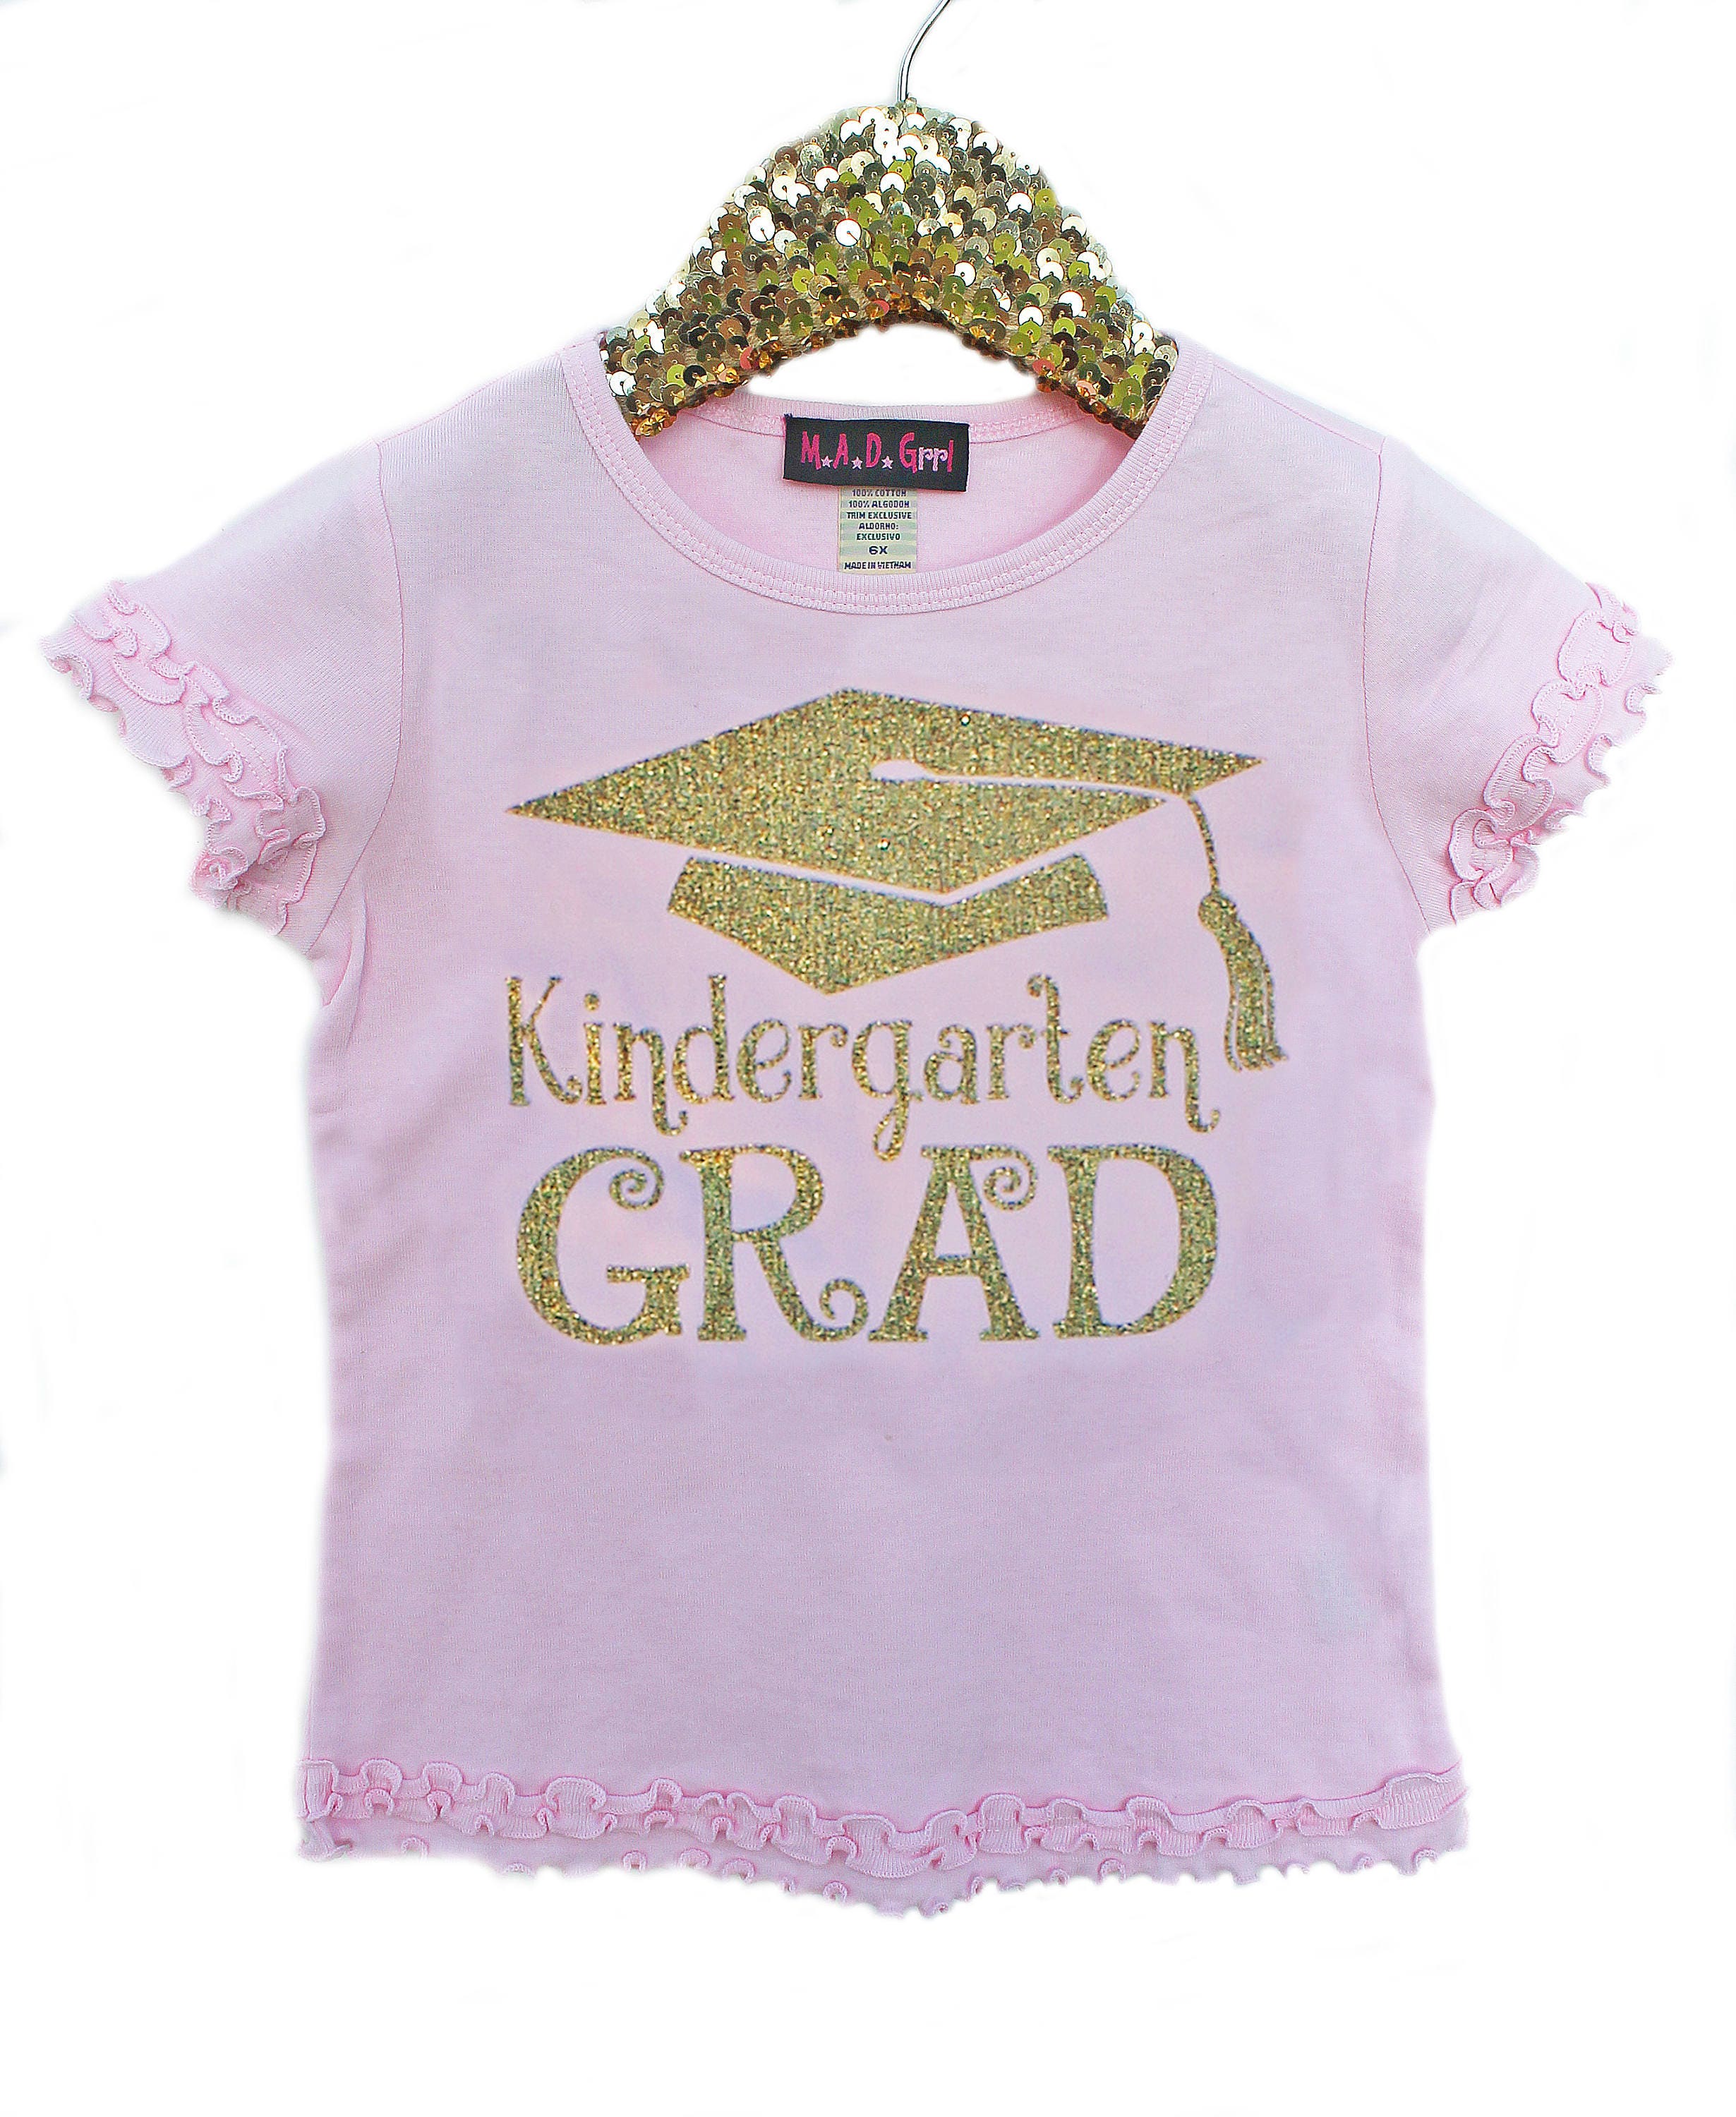 kindergarten graduation t shirts